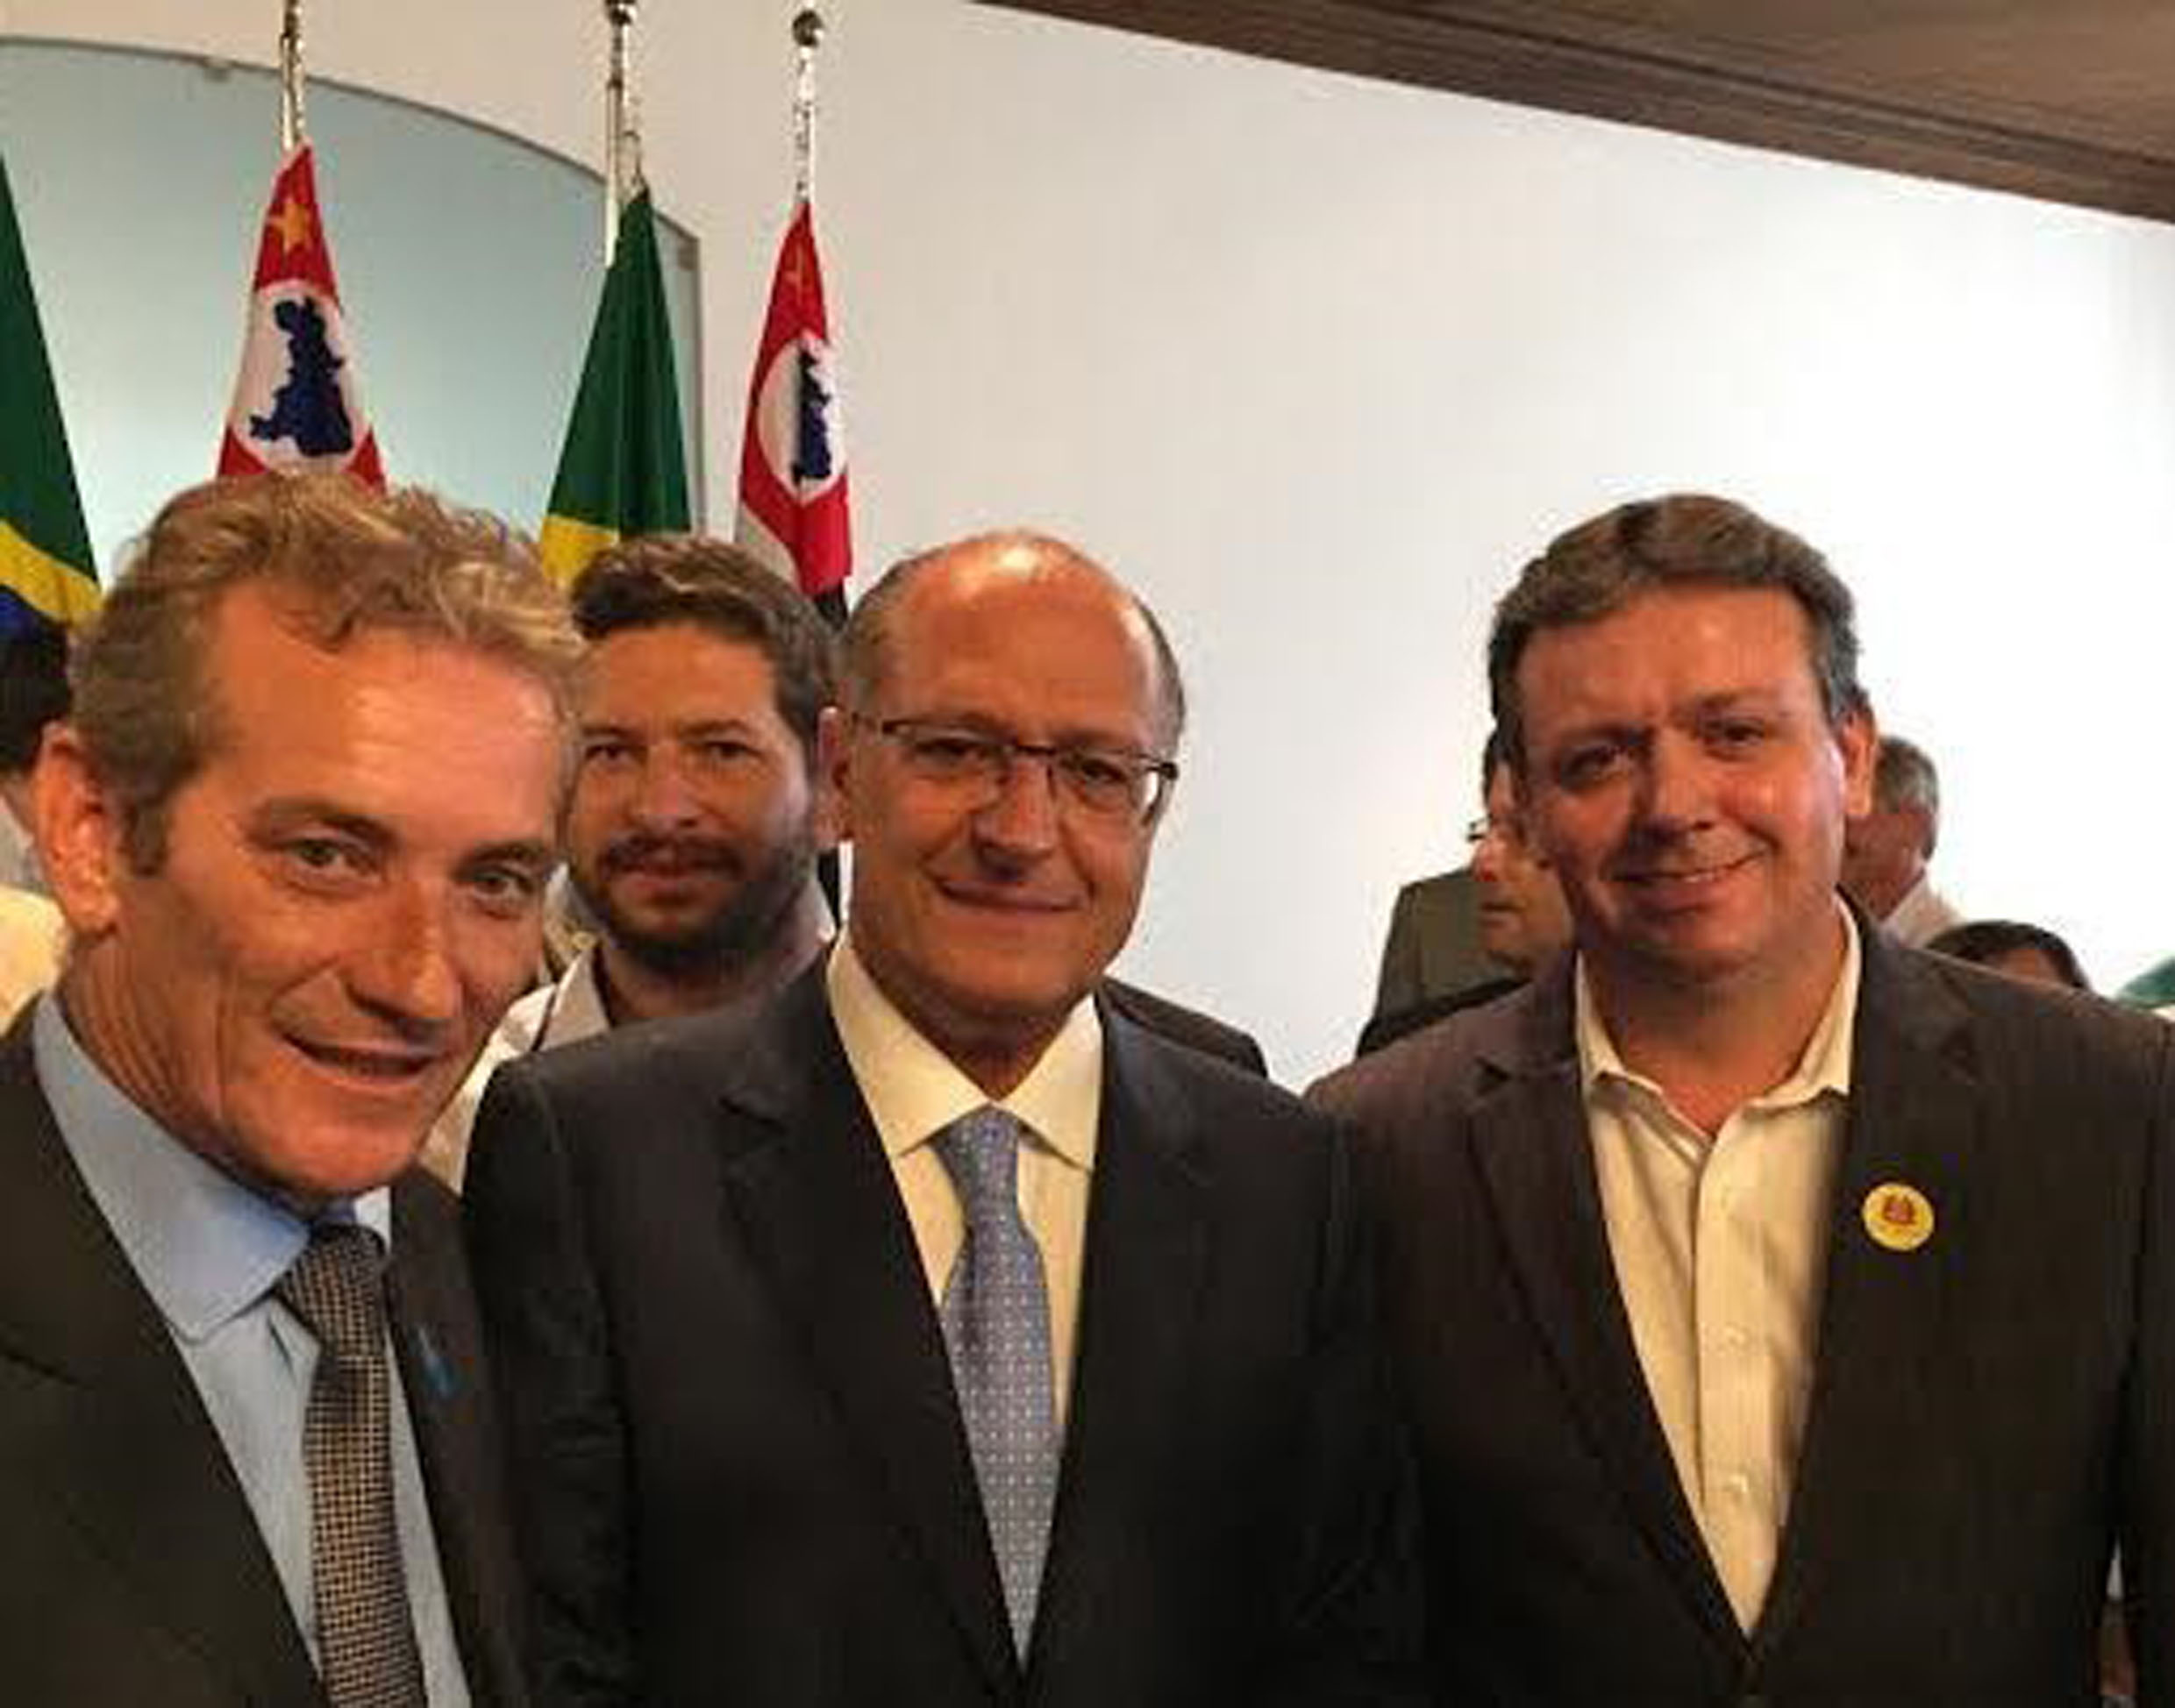 Ed Thomas, Alckmin e Duran<a style='float:right;color:#ccc' href='https://www3.al.sp.gov.br/repositorio/noticia/N-03-2016/fg186427.jpg' target=_blank><i class='bi bi-zoom-in'></i> Clique para ver a imagem </a>